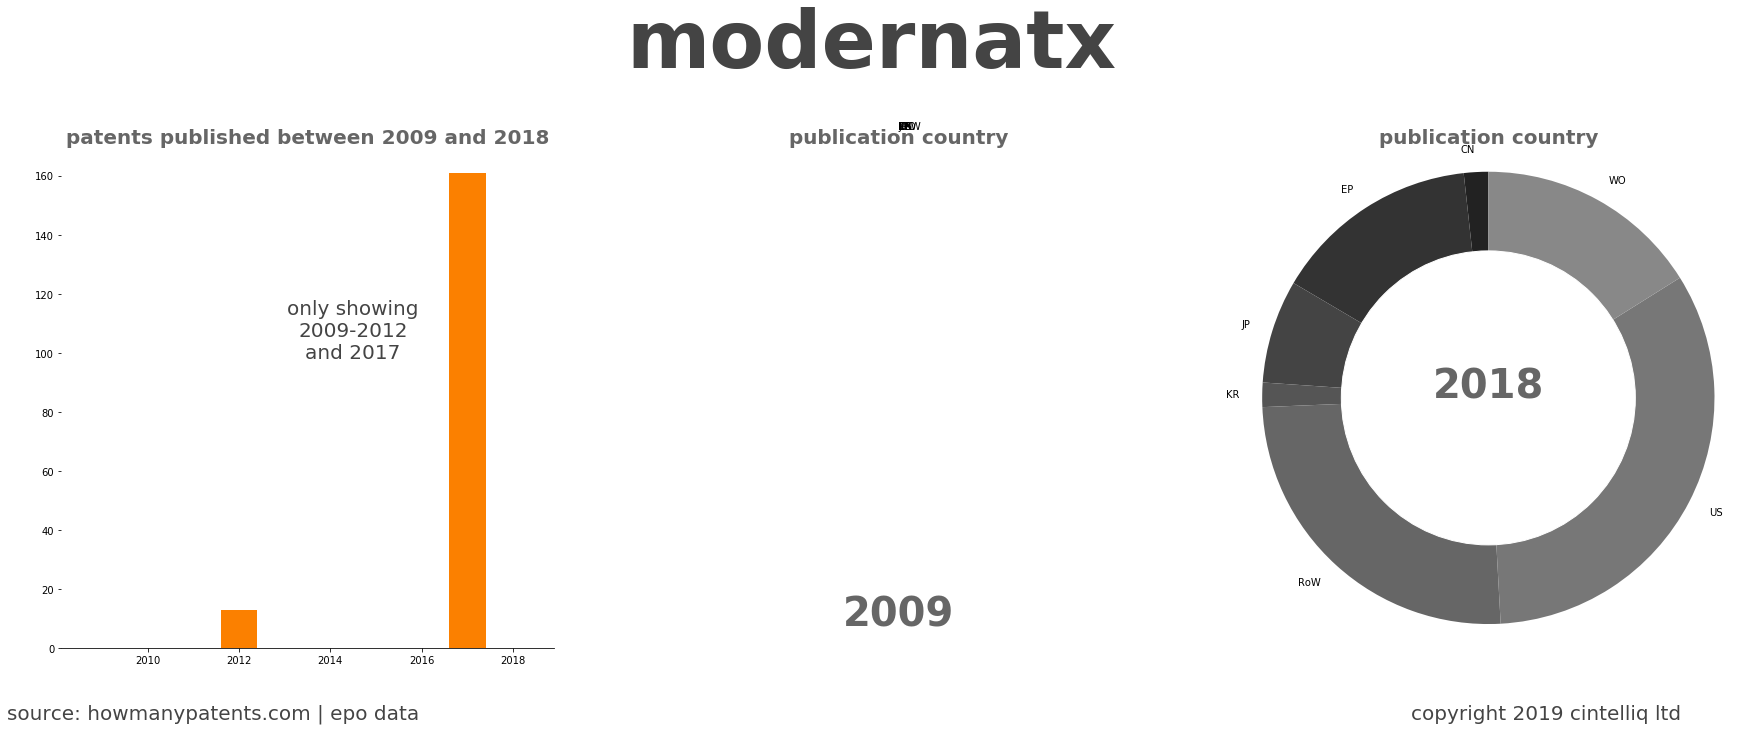 summary of patents for Modernatx